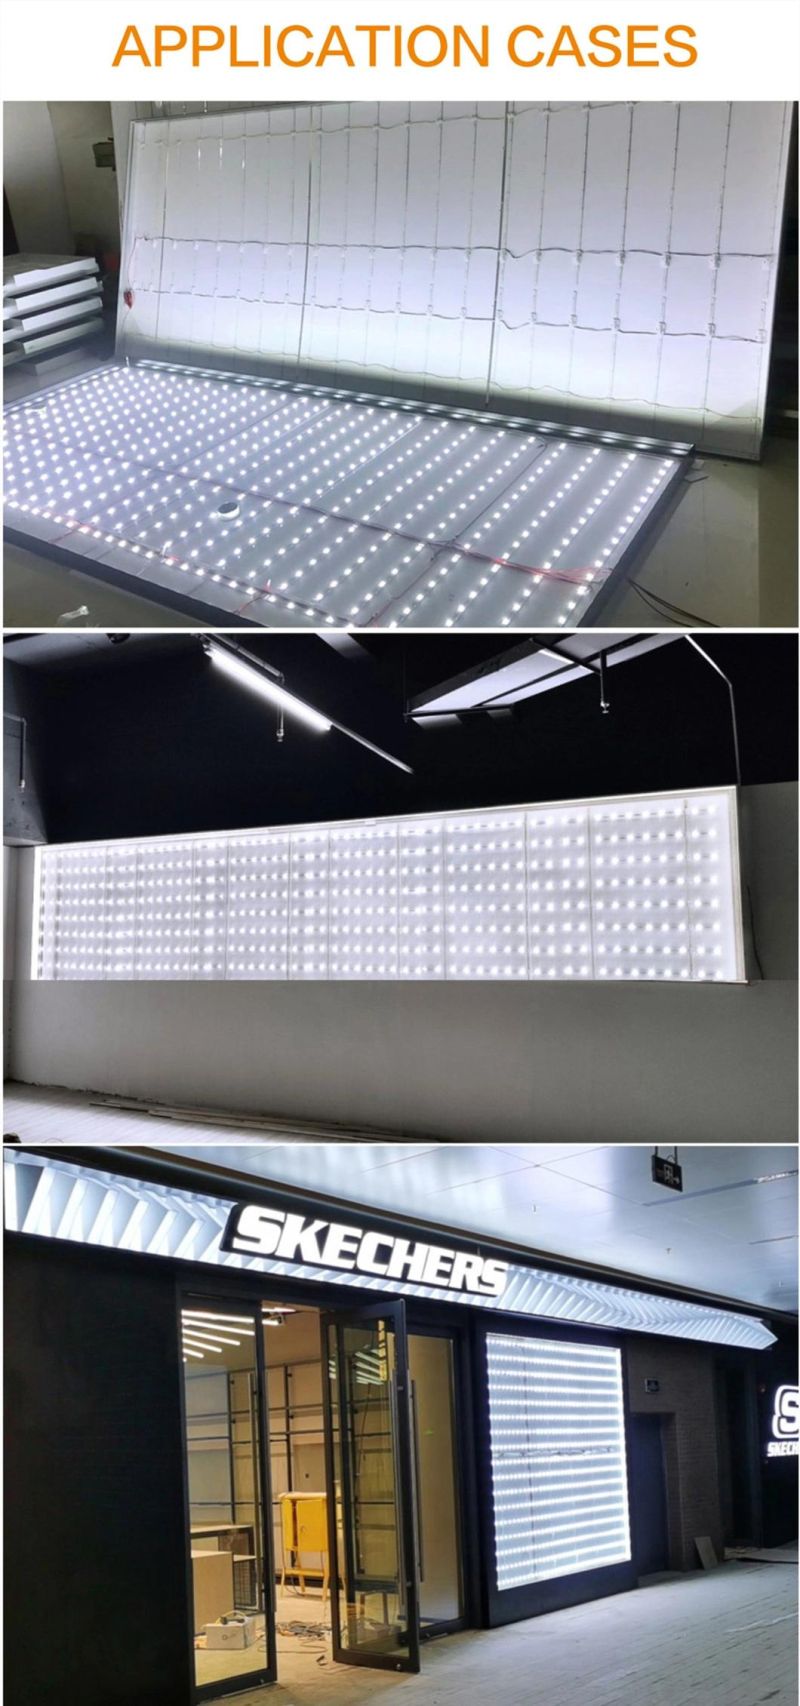 High Voltage Diffuse Light Strips LED Strip Engineering Waterproof Light Strip Bar